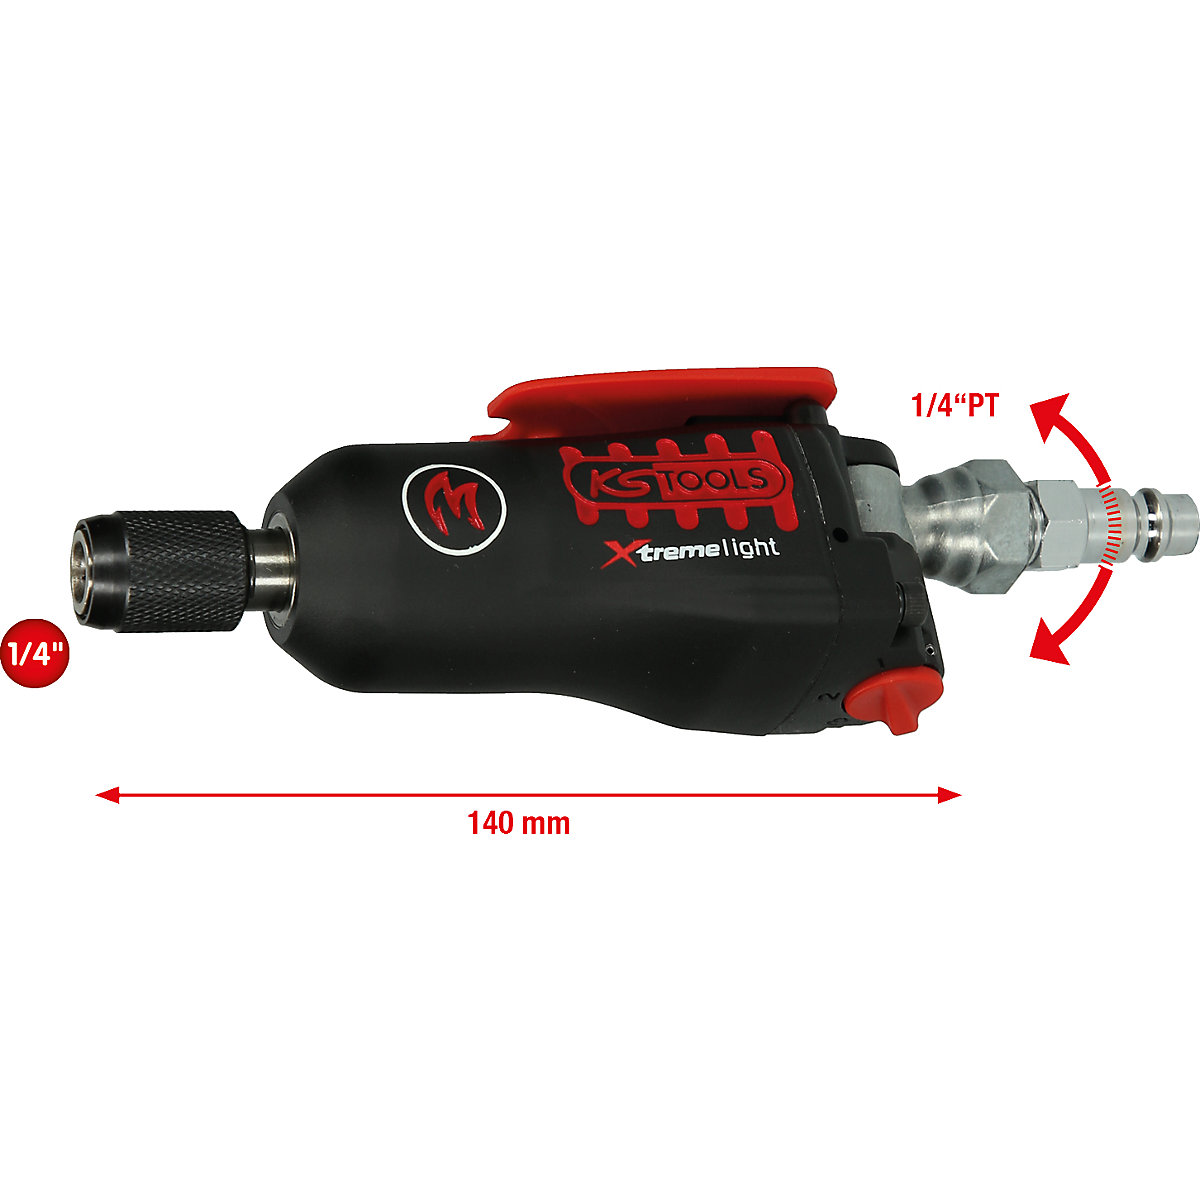 Tournevis-visseuse-perceuse pneumatique 1/4'' MONSTER Xtremelight Mini Bit  – KS Tools: 108 Nm